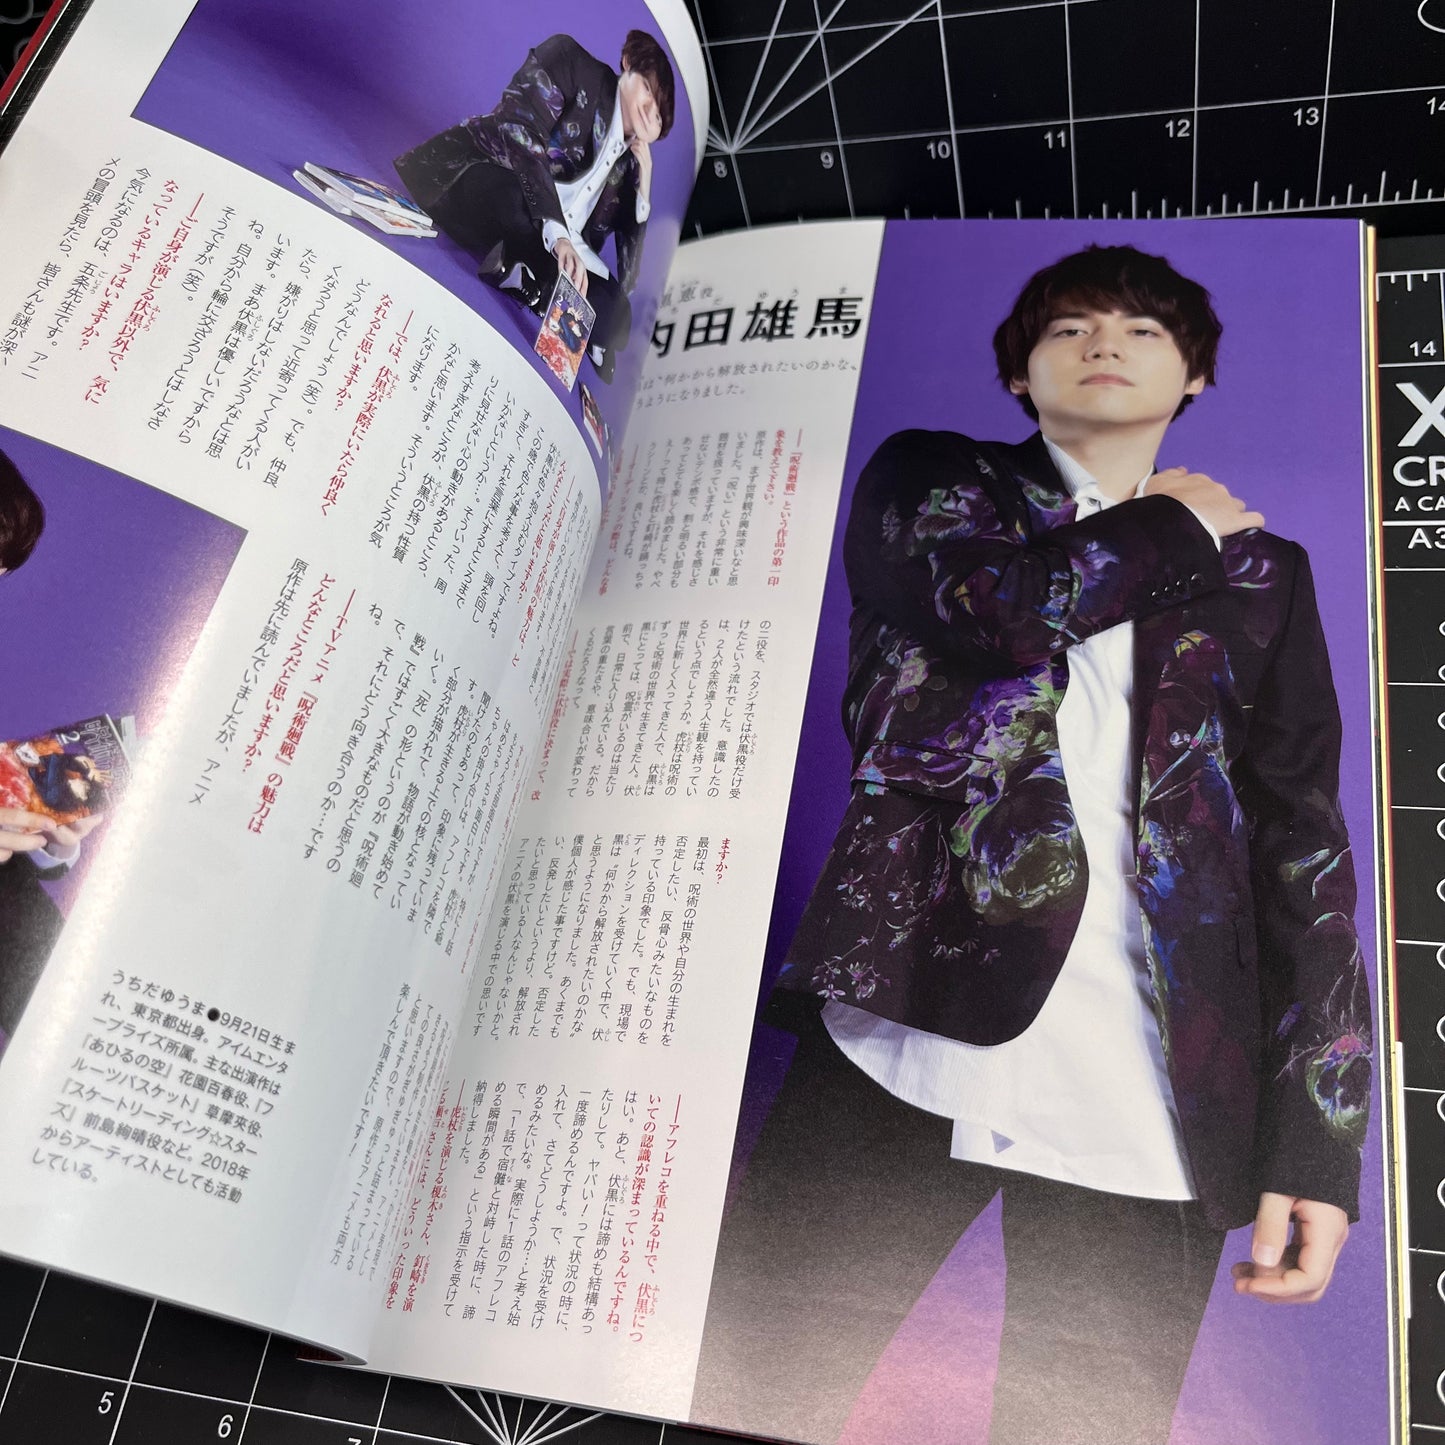 Jujutsu Kaisen TV Anime Official Start Guide Art Book from Japan